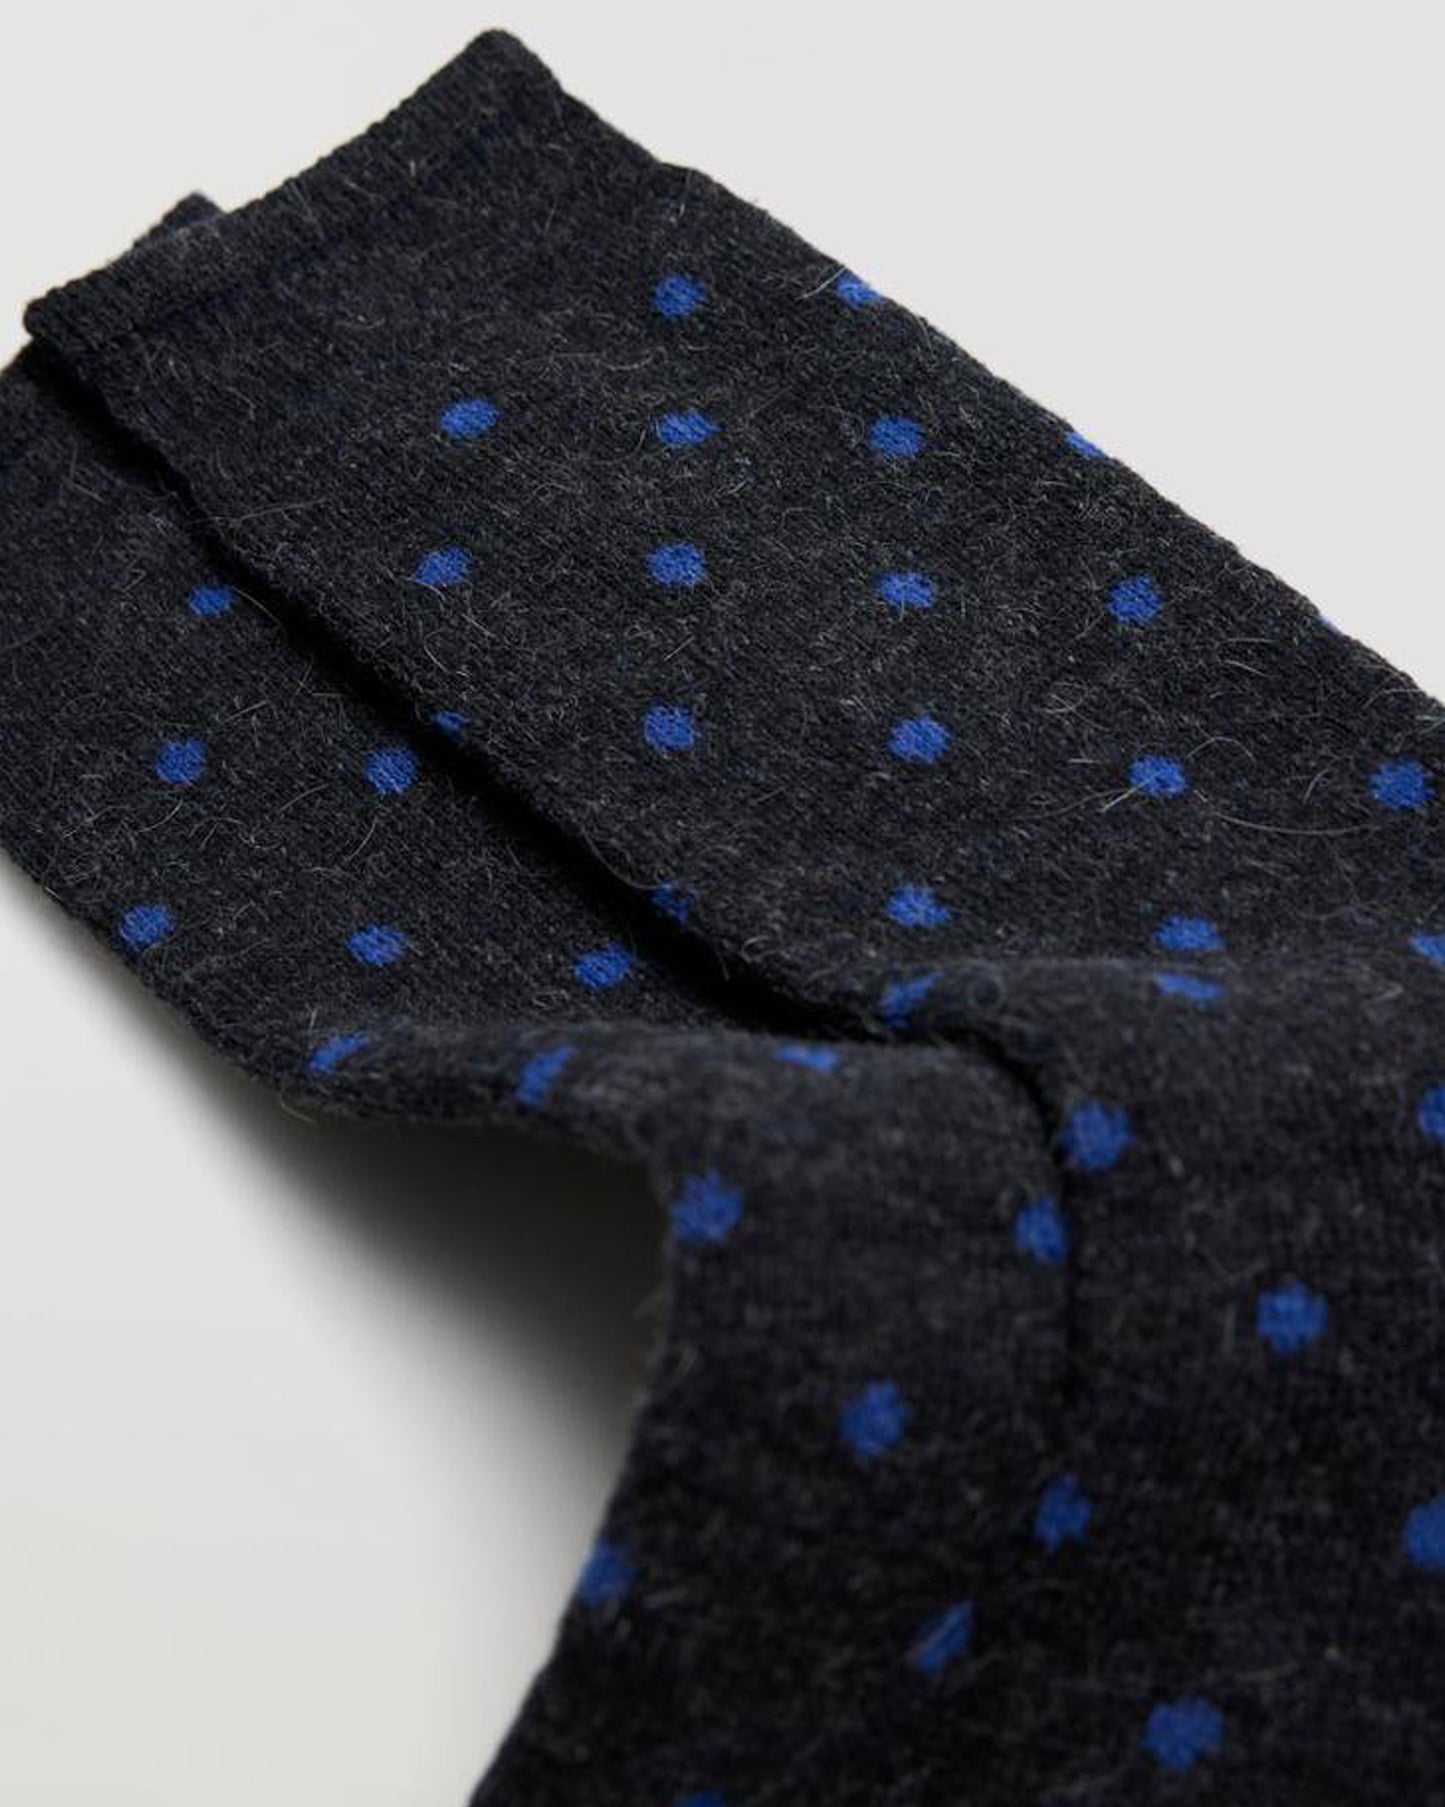 Ysabel Mora 22890 Spot Thermal Socks - Dark grey warm thermal wool mix socks with a blue polka dot spot pattern. Close up.